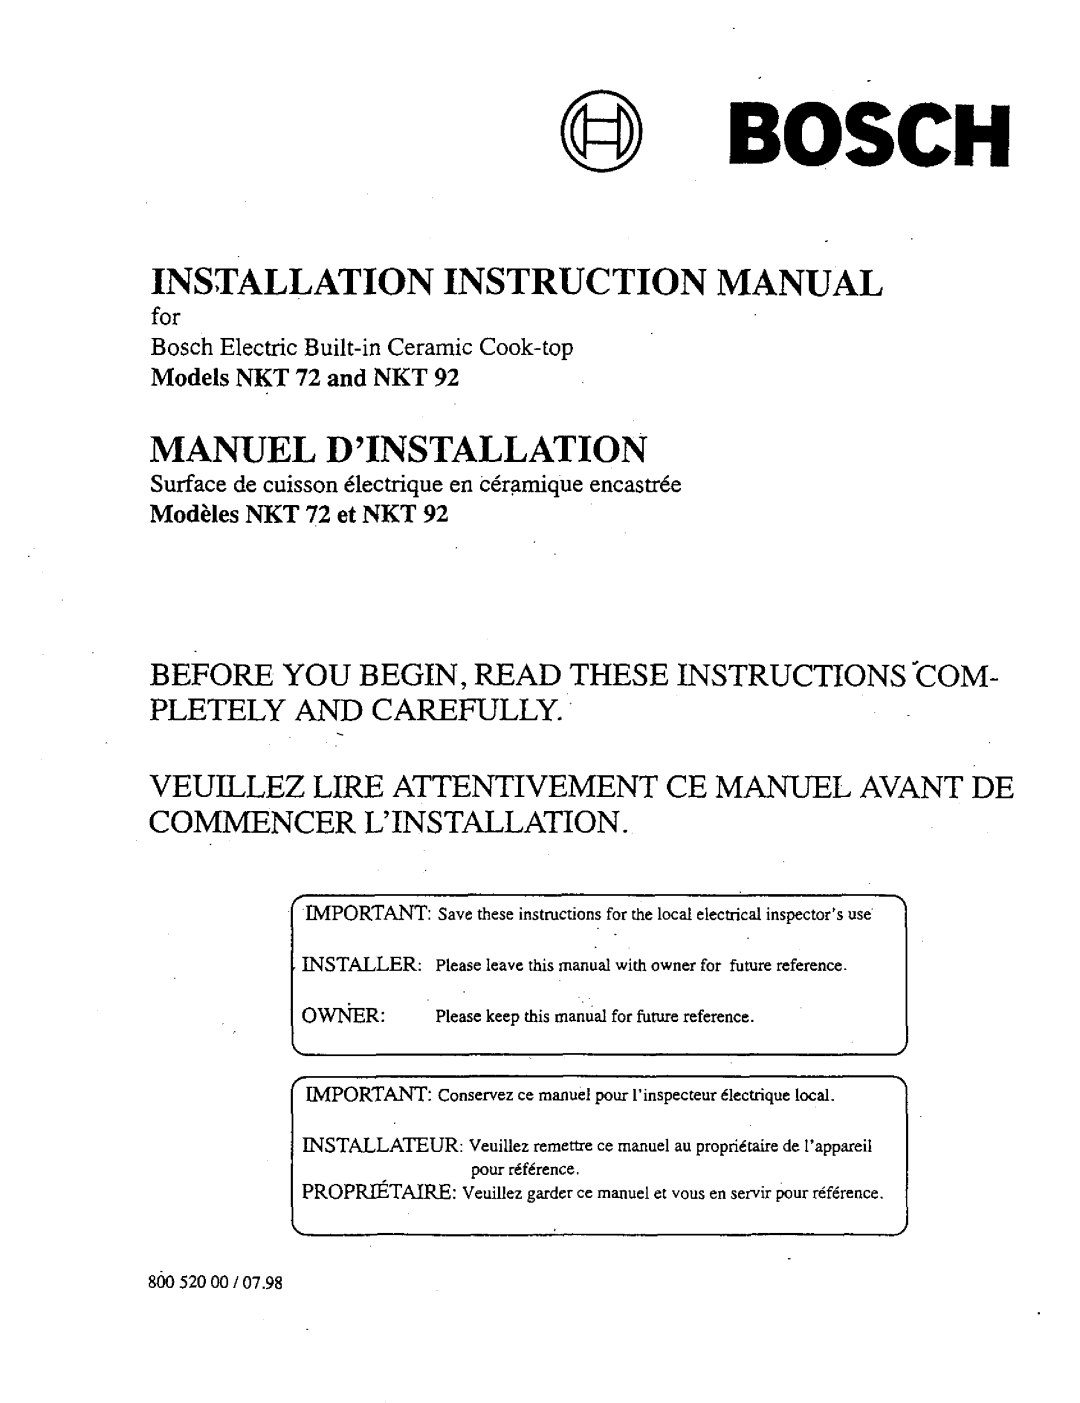 Bosch Appliances NKT 92 instruction manual Manuel Dinstallation, @ Bosch, Veuillez Lire Attentivement Ce Manuel Avant De 